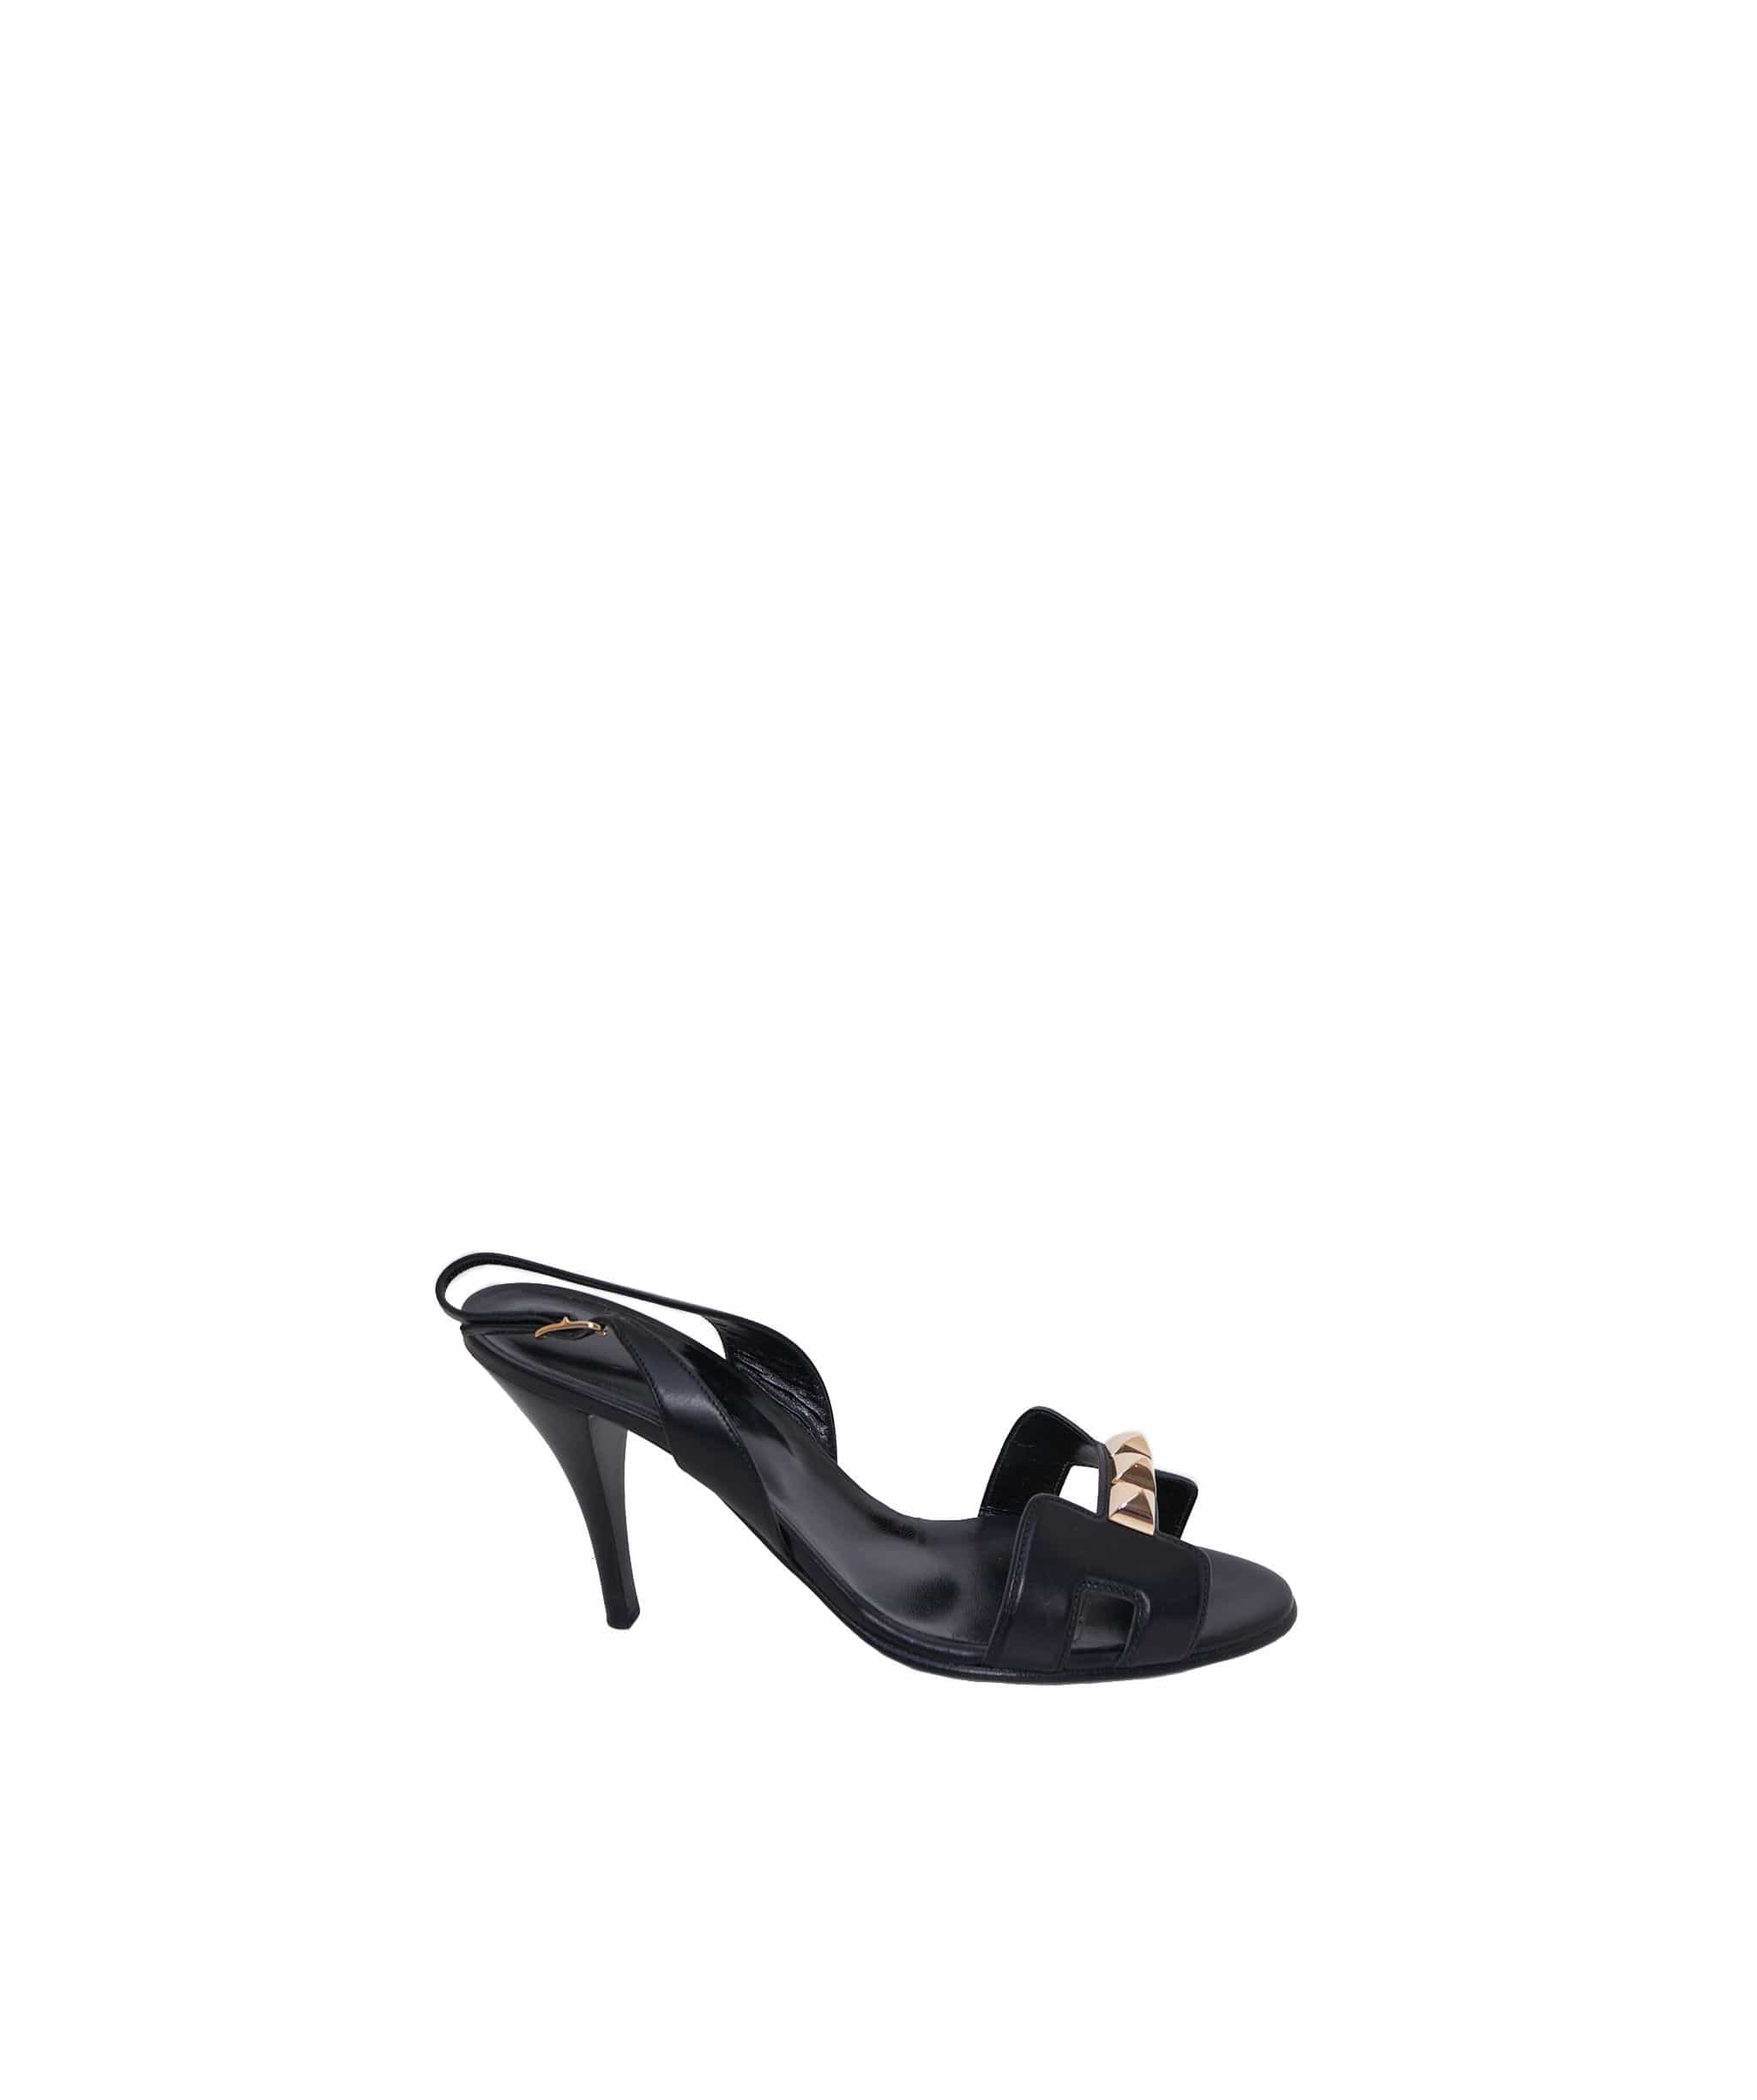 Hermès Hermes Black Leather Semelle Cuir Heeled Sandals Size 39 AGC1009